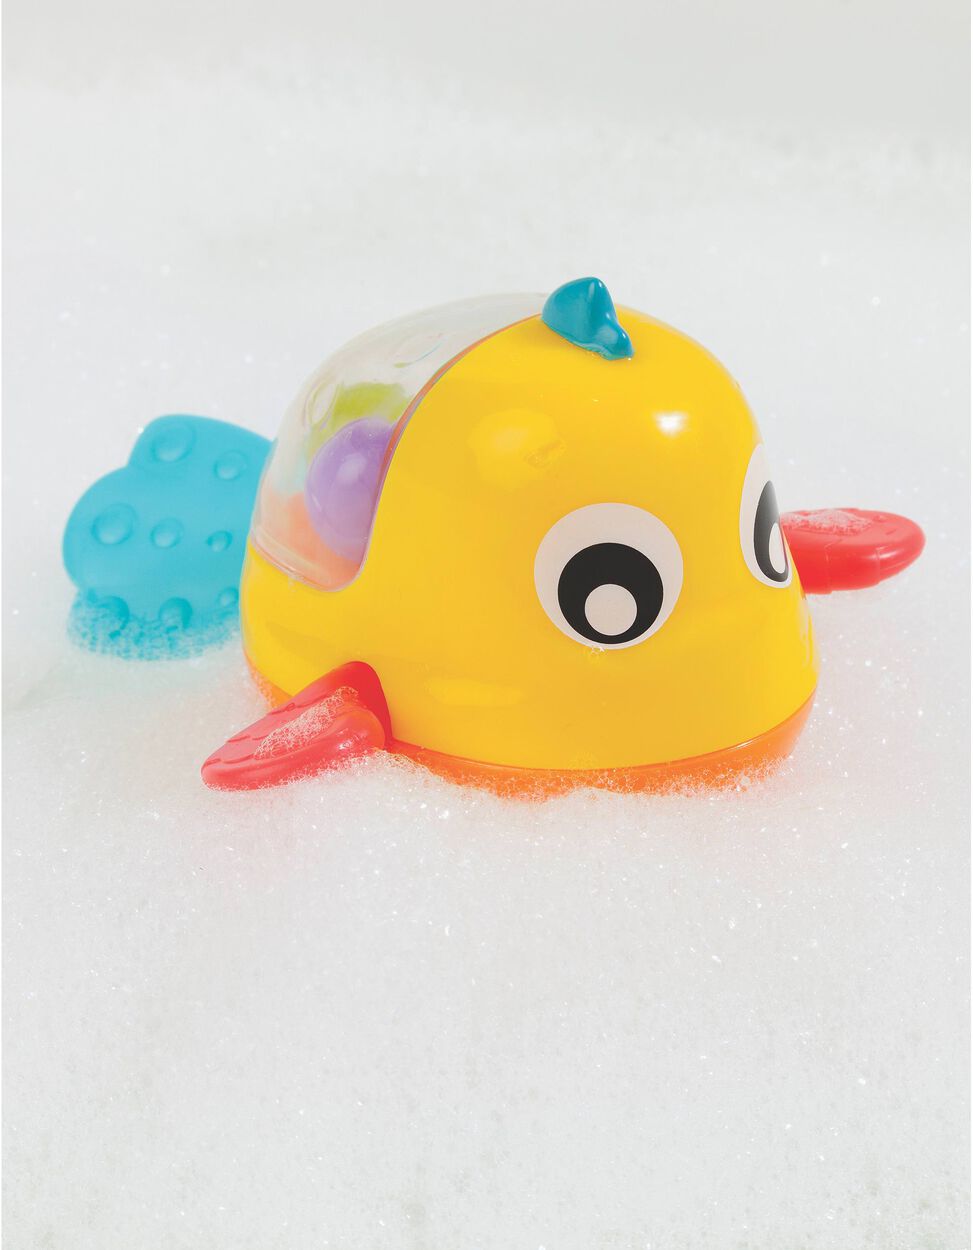 Brinquedo De Banho Paddling Fish Playgro 0M+